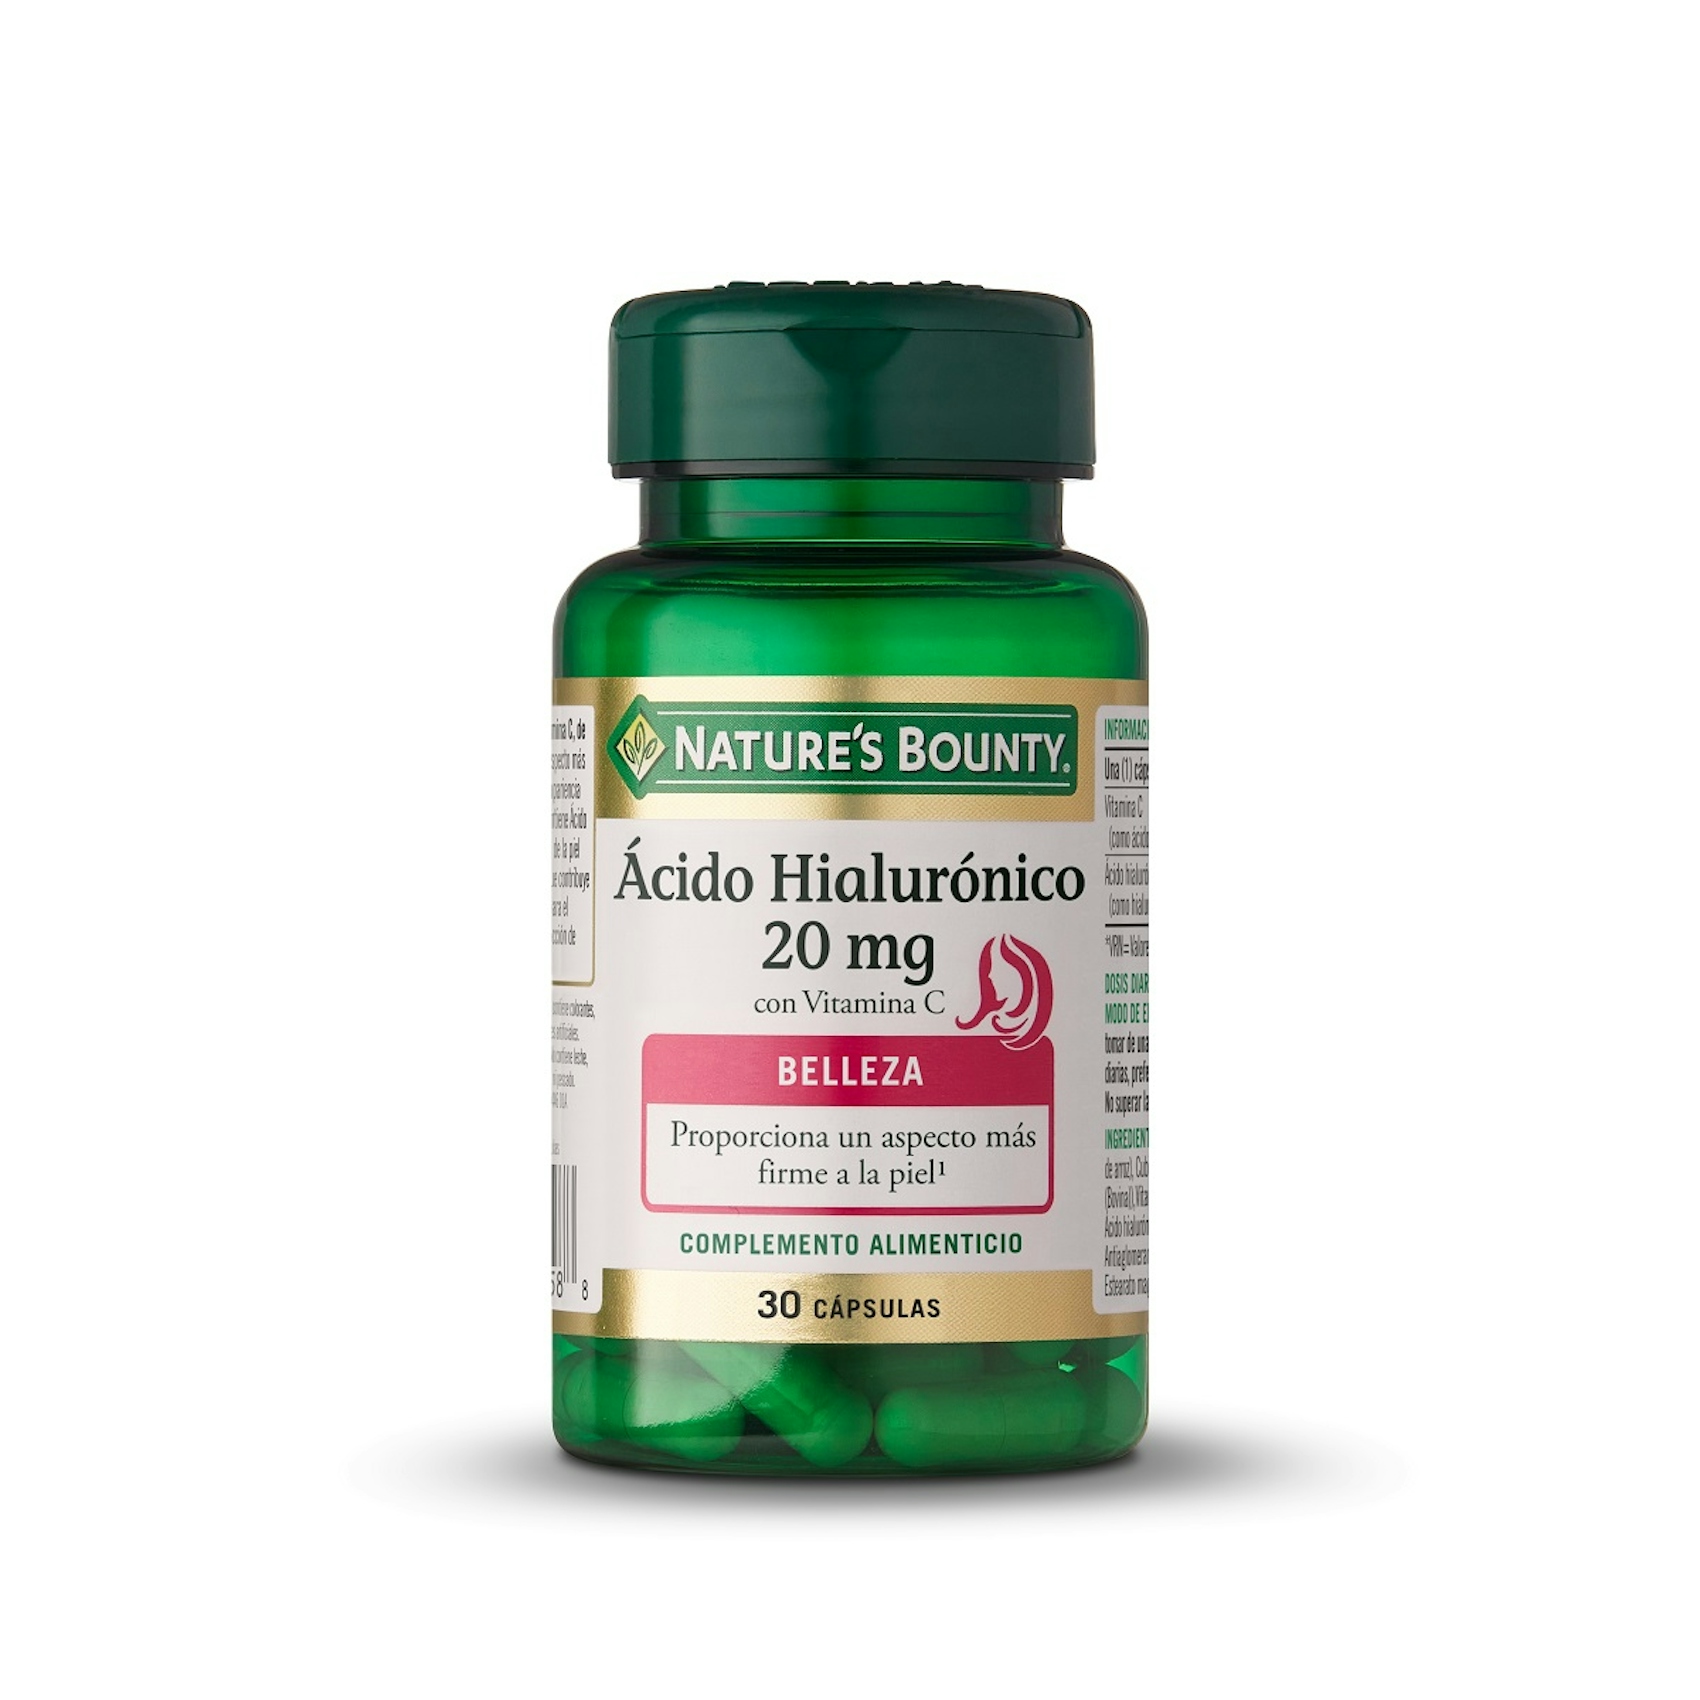 Ácido Hialurónico 20 mg con Vitamina C - 30 cápsulas